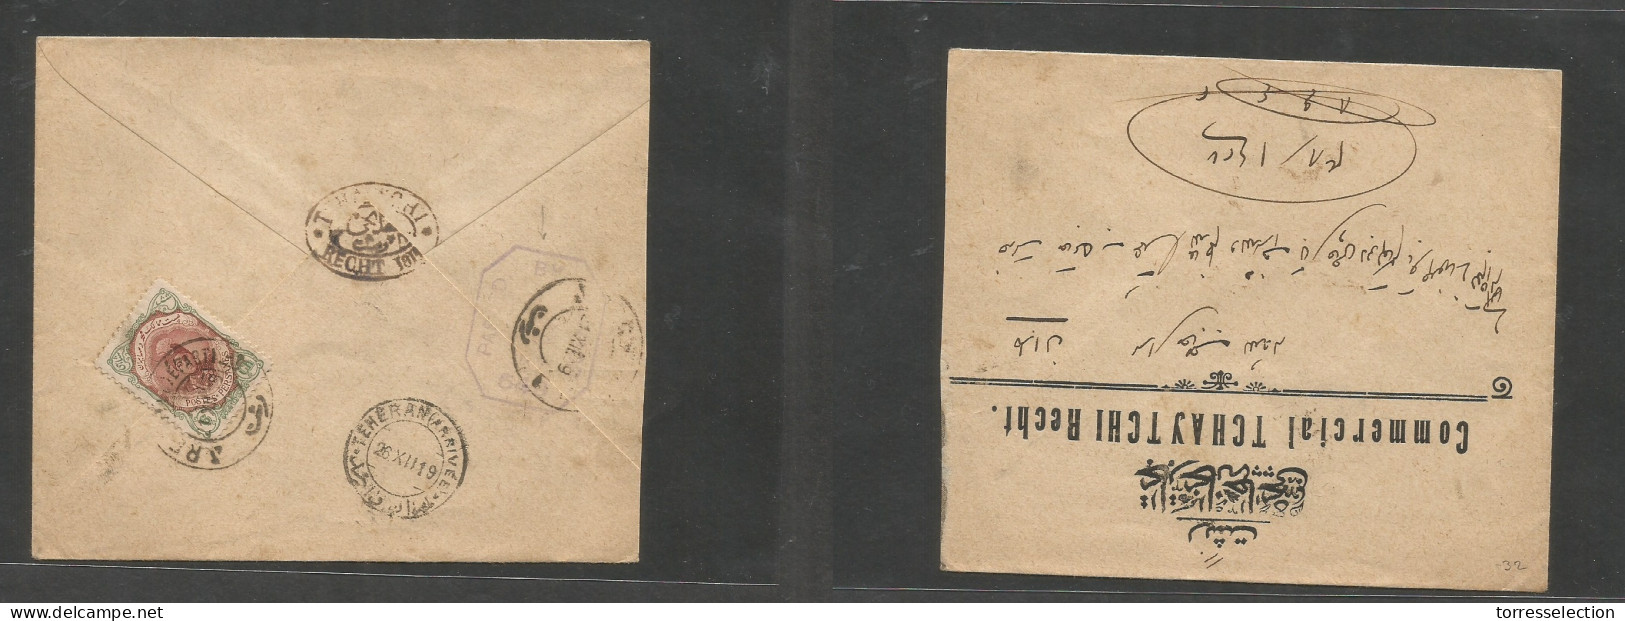 PERSIA. 1919 (21 Dec) Recht - Teheran (26 Dec) Comercial Single Fkd 6d On Reverse Of Envelope, Tied Cds + Transited + Br - Irán